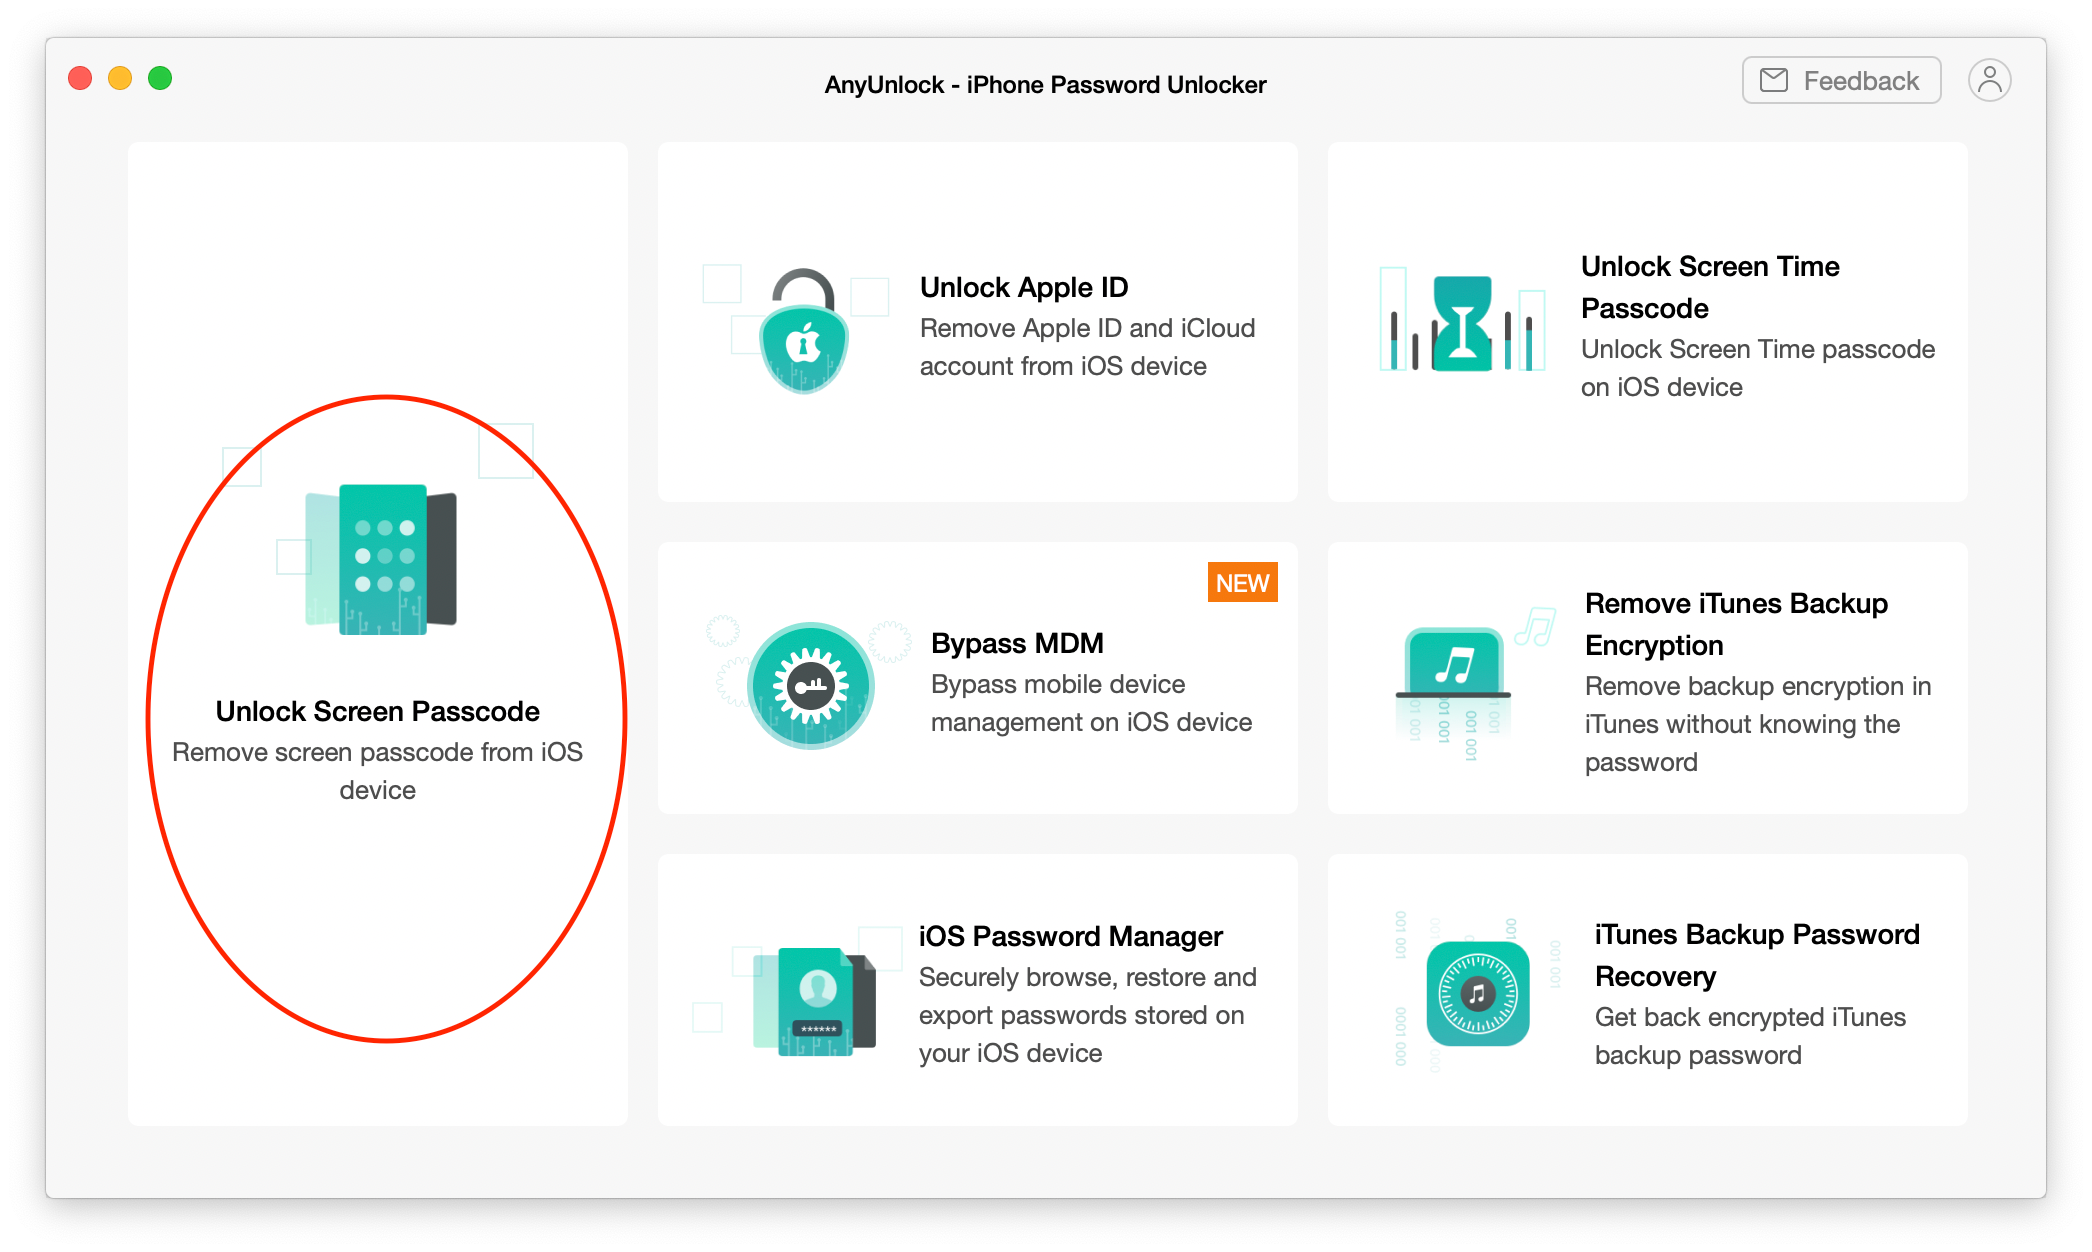 Unlock Screen Passcode option in Anylock